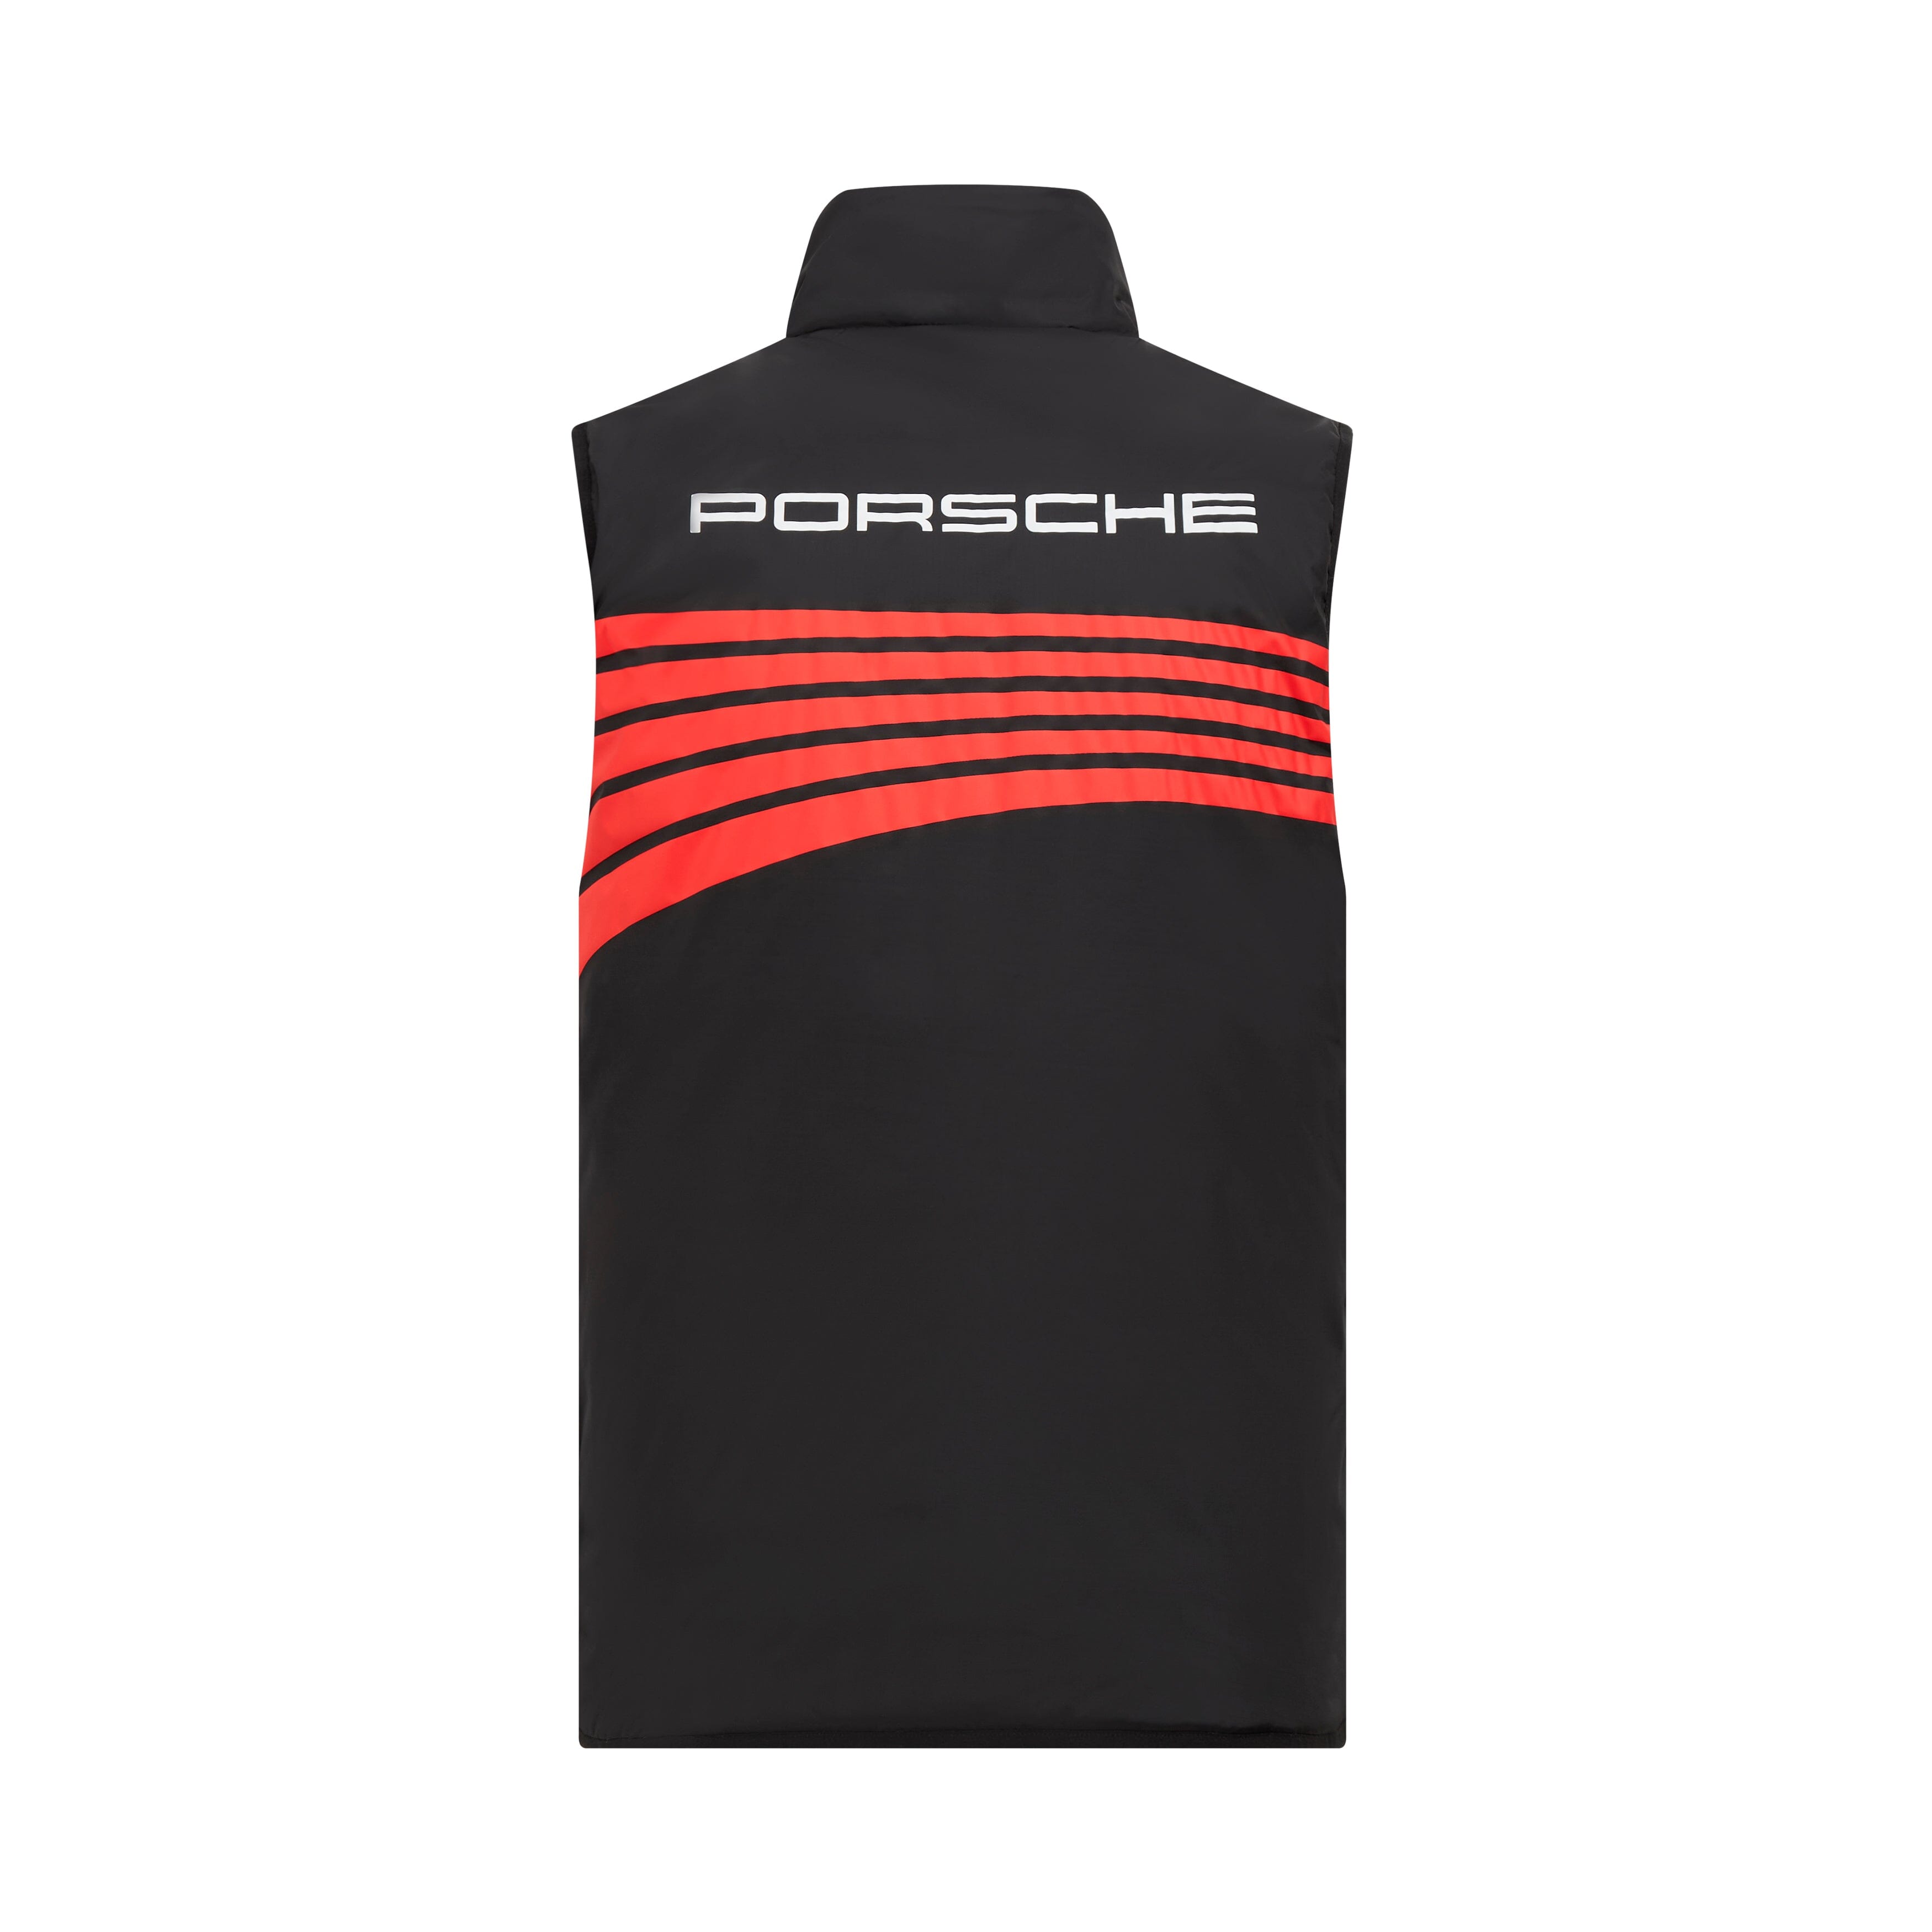 Porsche Penske Motorsport Men's Vest - Black